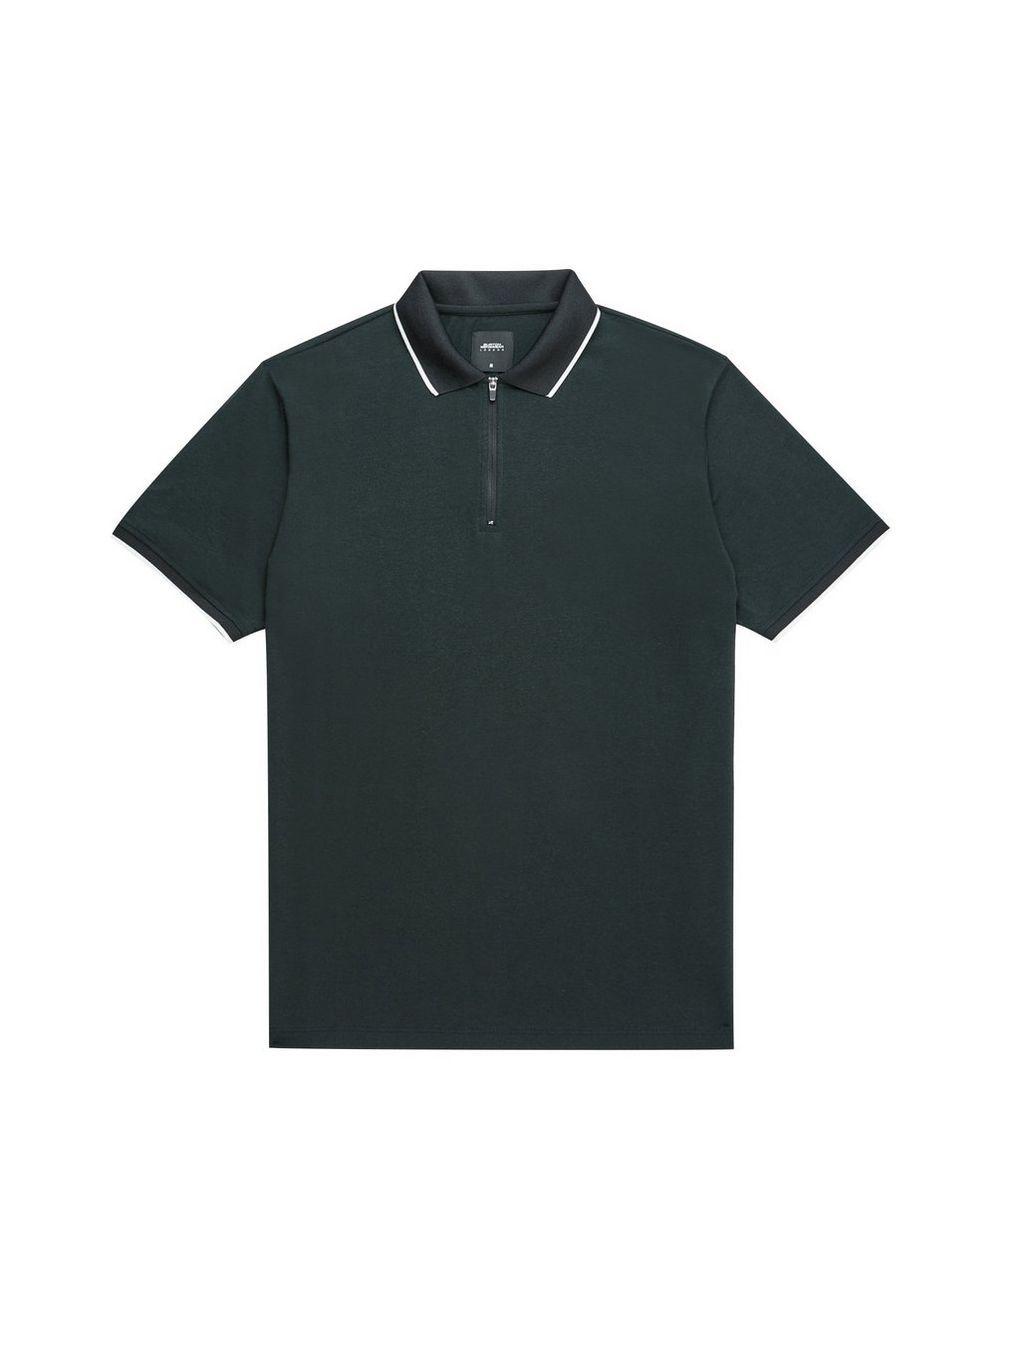 Black Grass Logo - Black Grass Zip Neck Polo Shirt